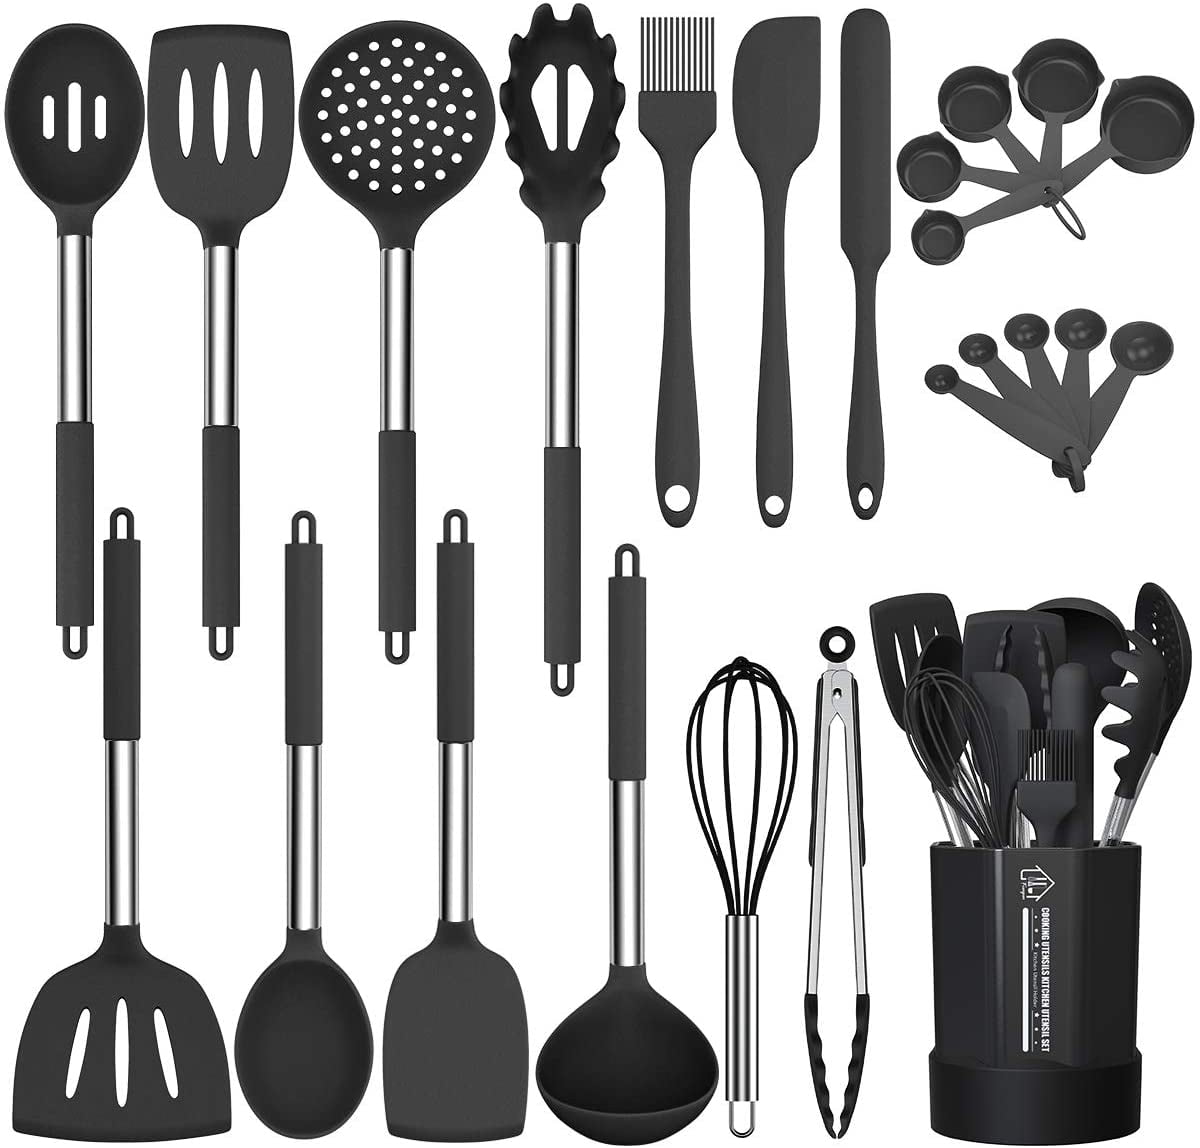 EatEx Kitchen Utensil Set 24 Nylon Stainless Steel Utensil Set, Non-Stick  and Heat Resistant Cooking Utensils Set, Kitchen Tools - Black 